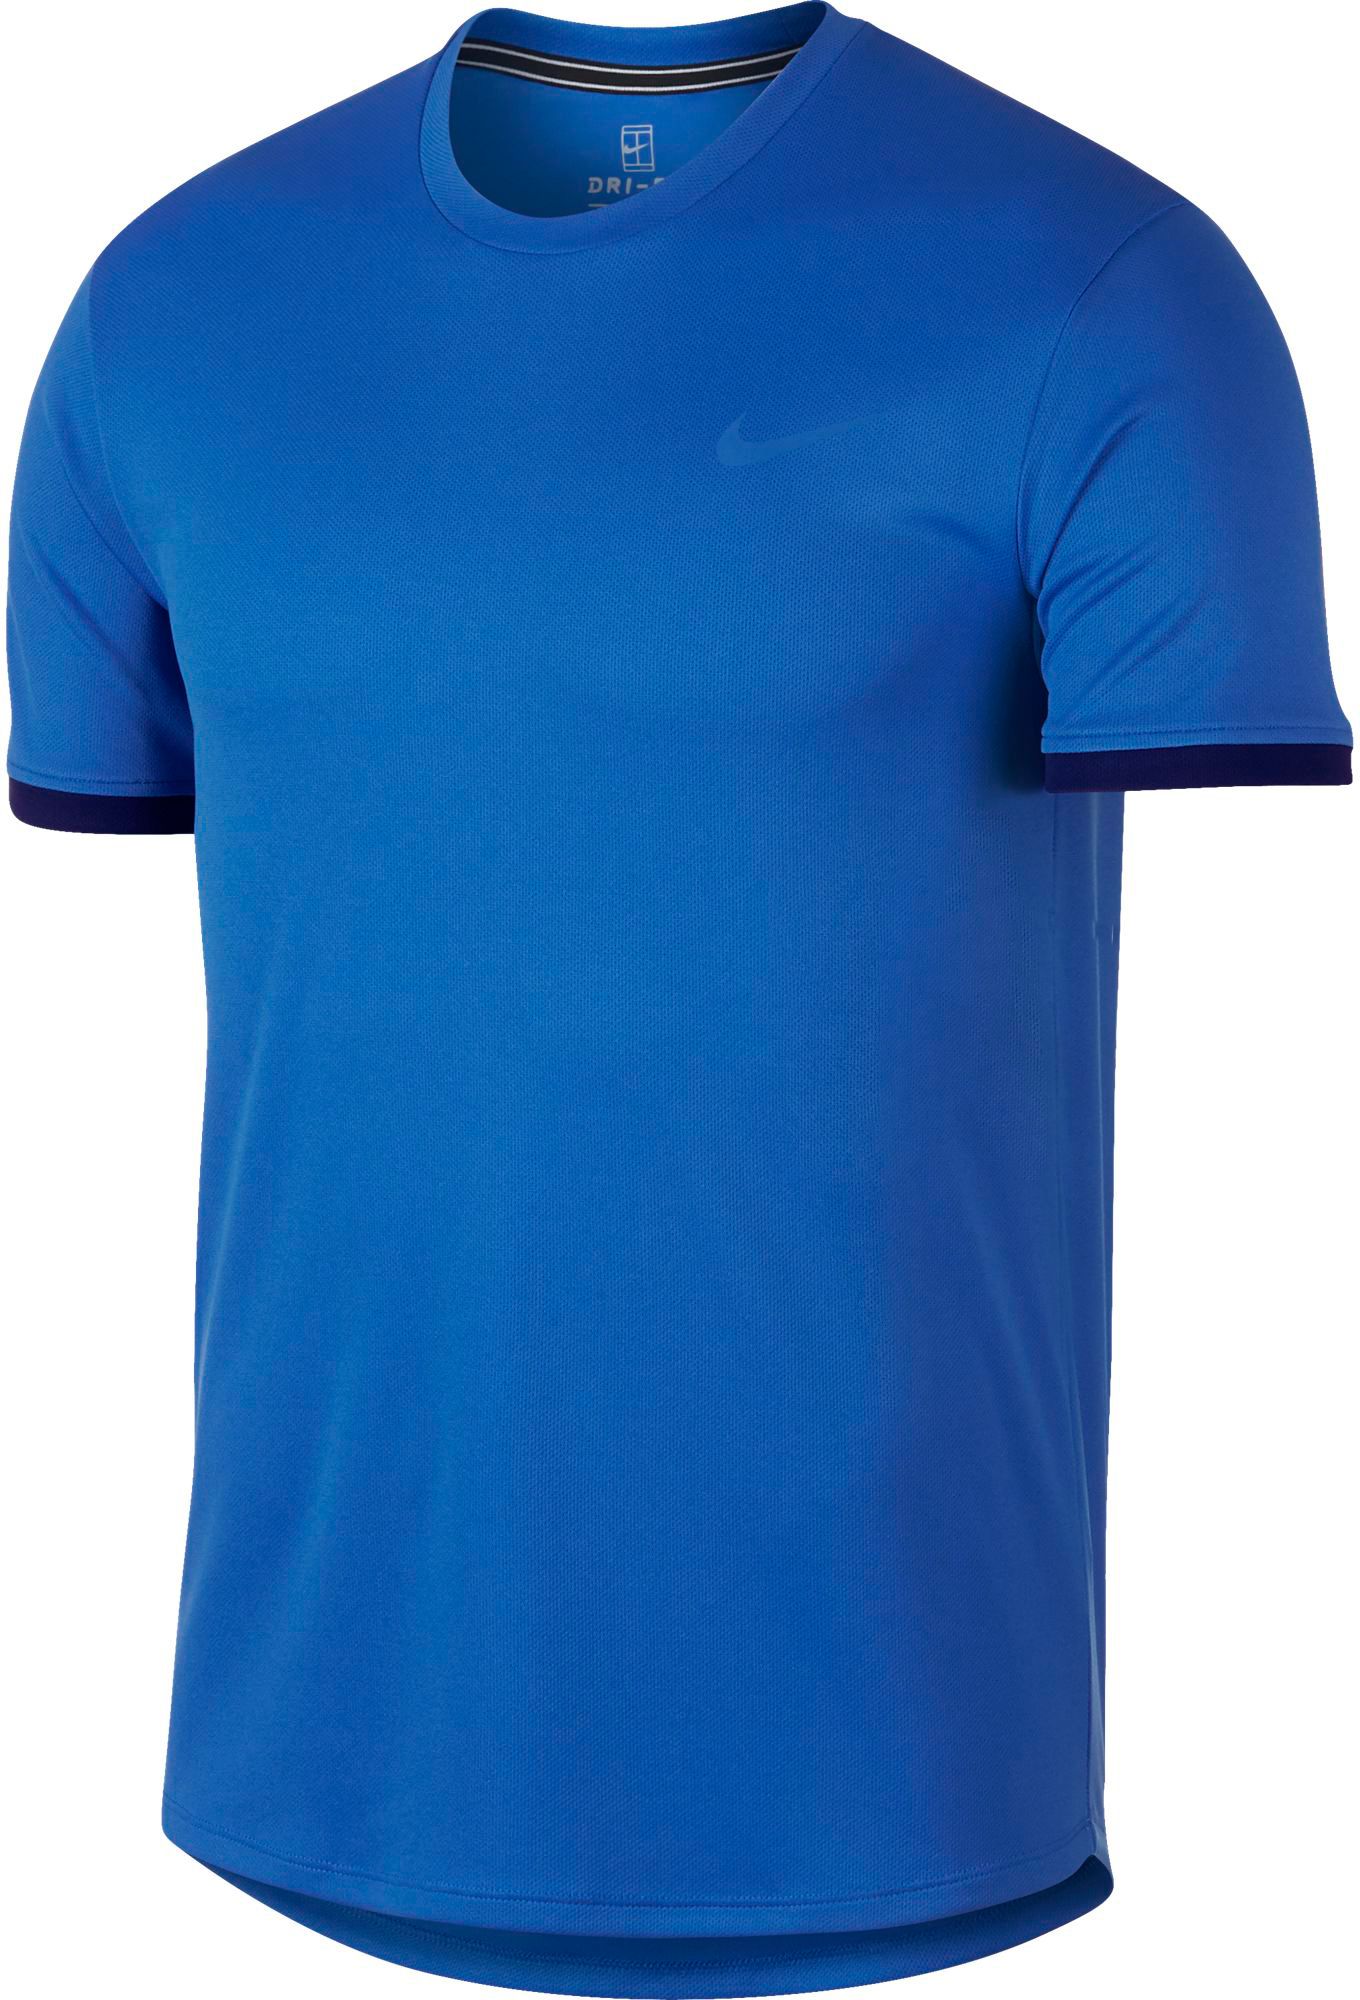 Nike Men's NikeCourt Dri-FIT Tennis Shirt - .97 - .97